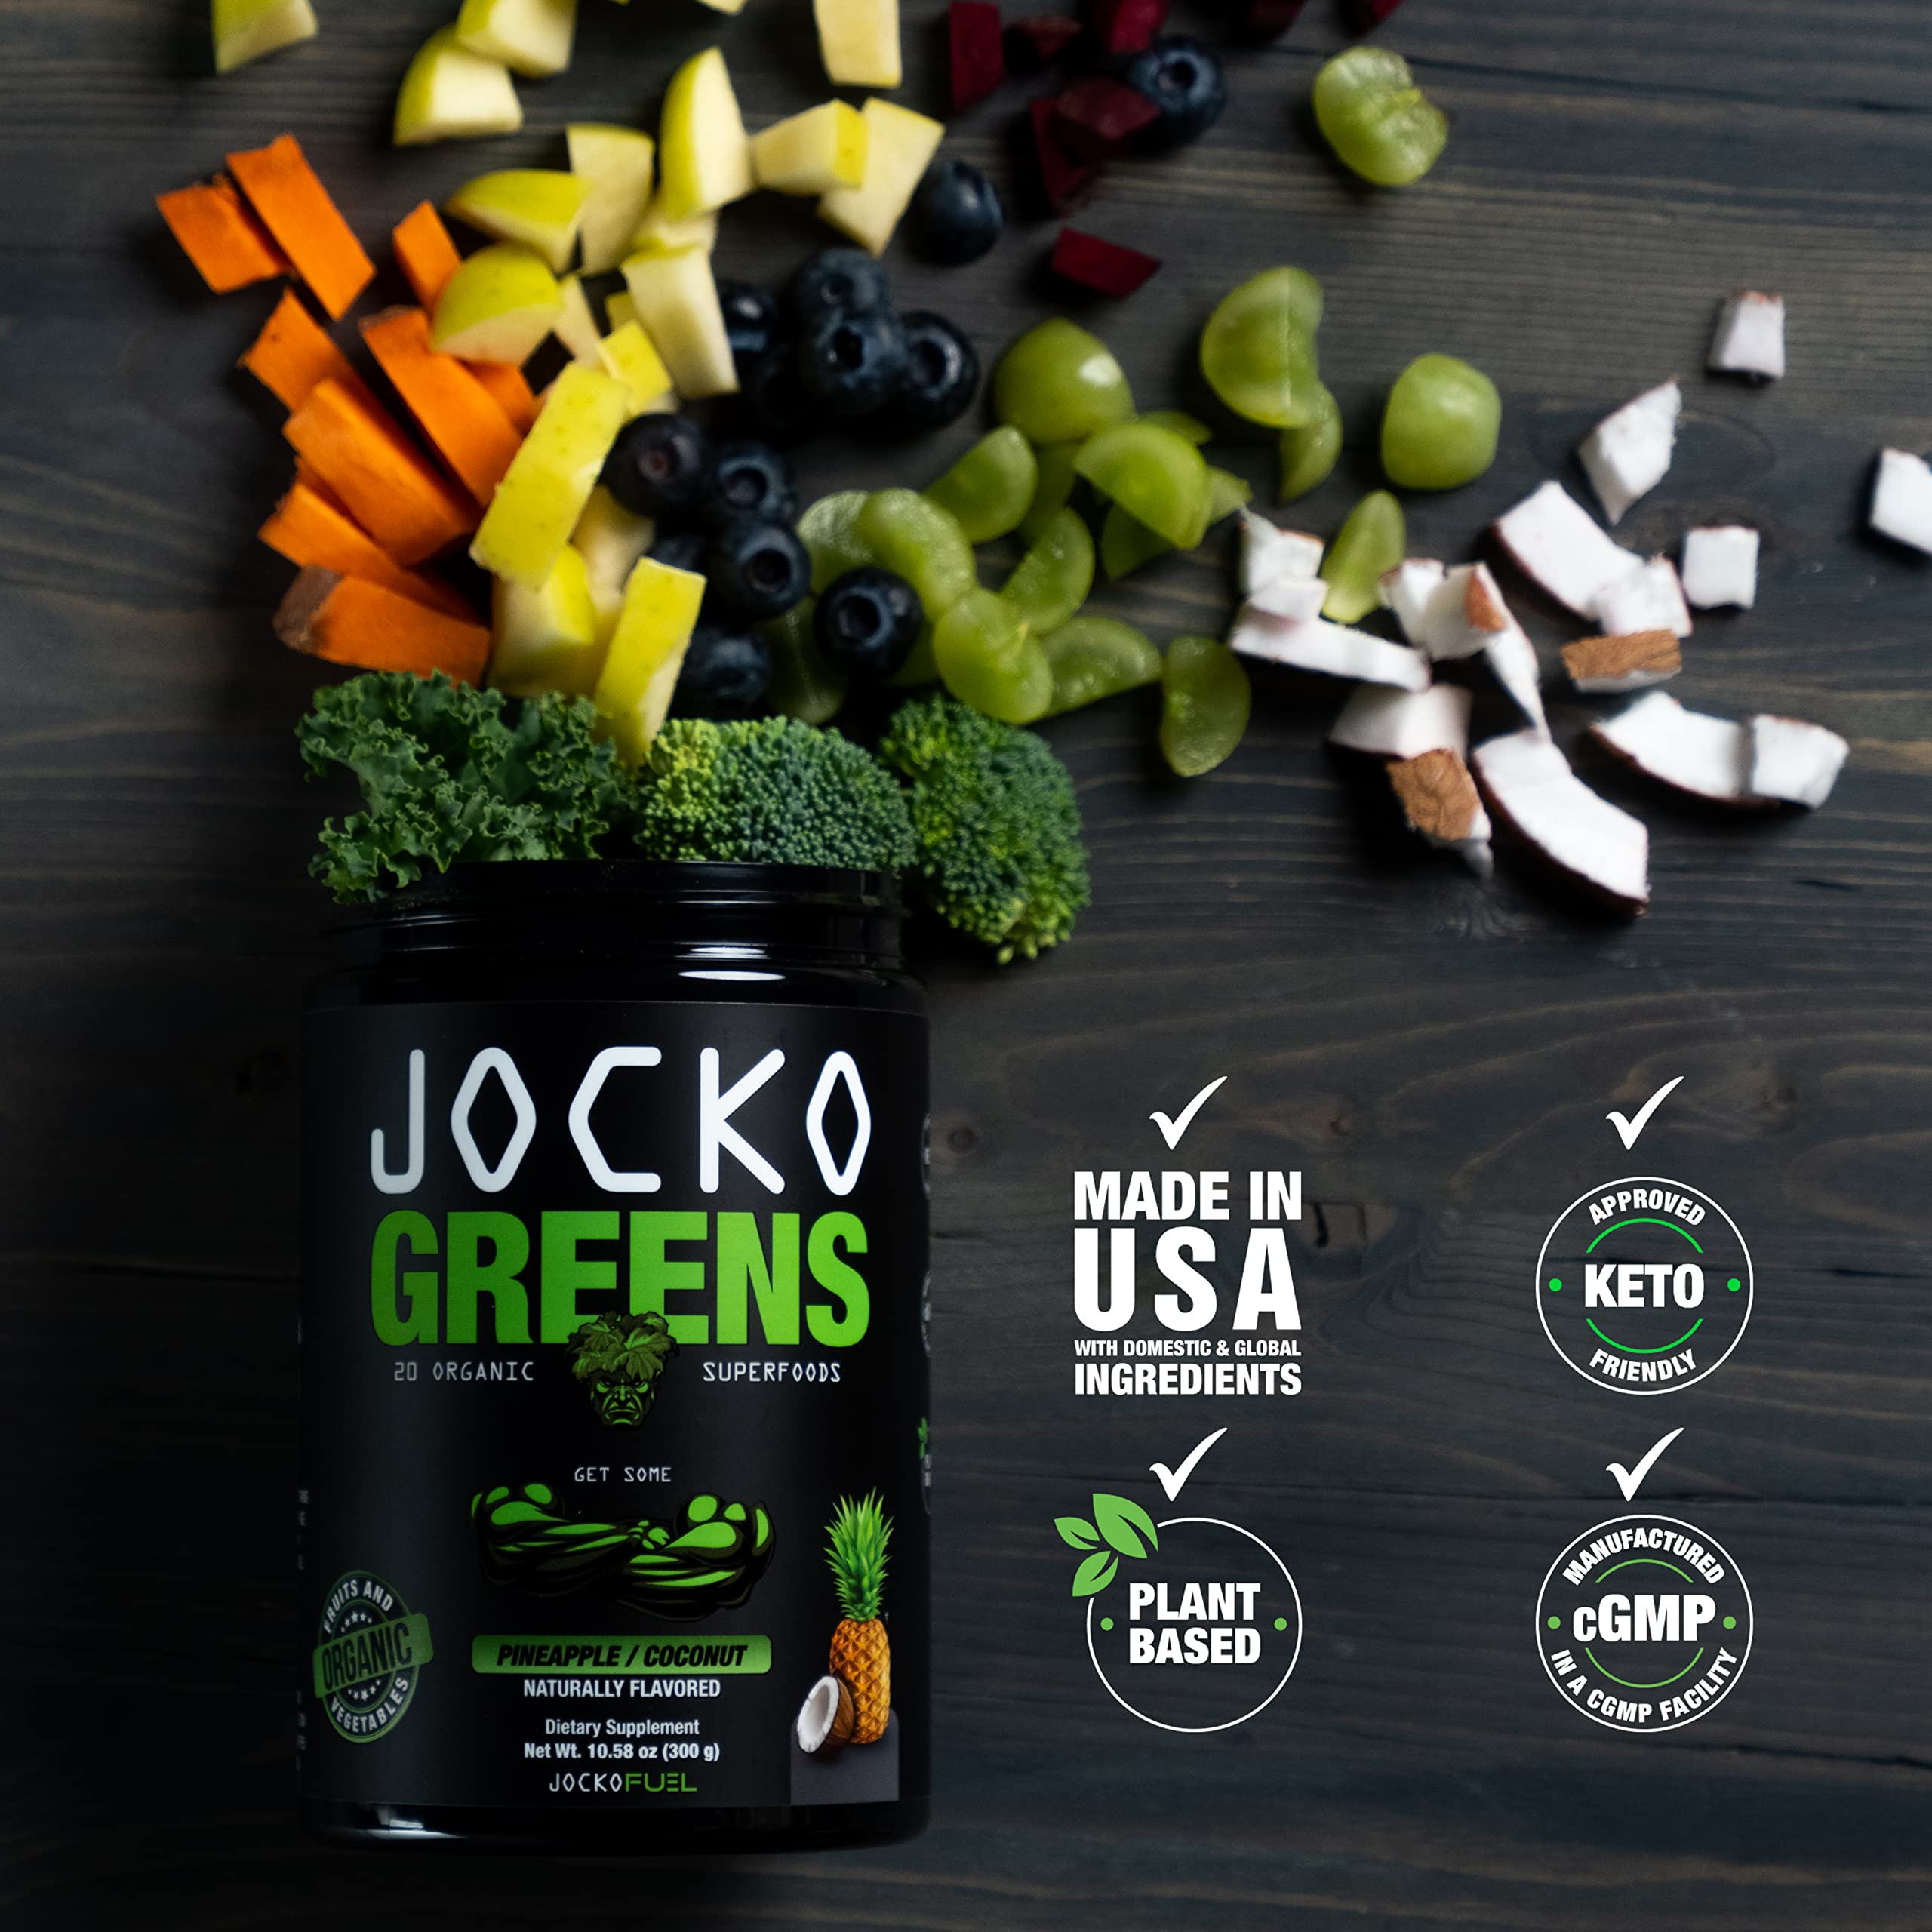 Jocko Fuel Greens Powder Bundle - Greens & Superfood Powder for Healthy Green Juice - Keto Friendly with Spirulina, Chlorella, Digestive Enzymes, & Probiotics - 60 Servings